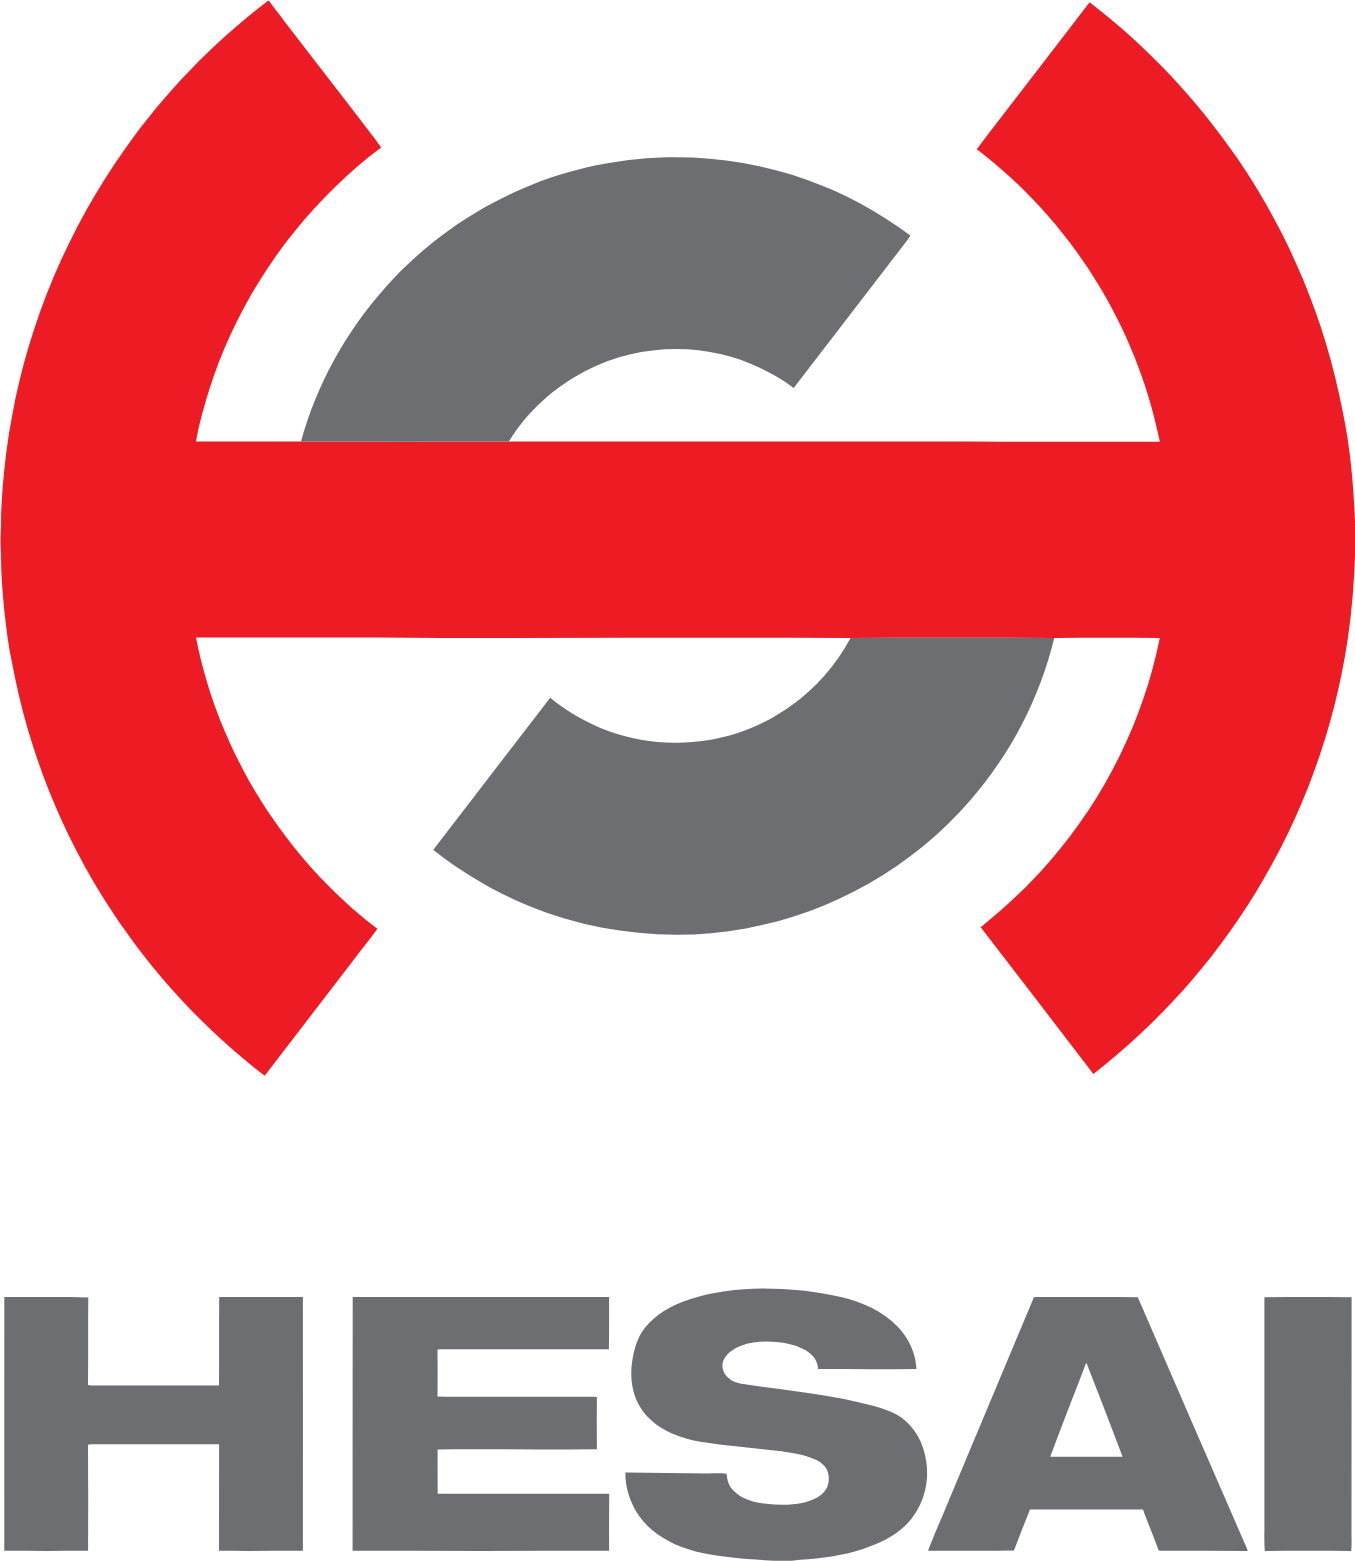 Hesai Group logo large (transparent PNG)